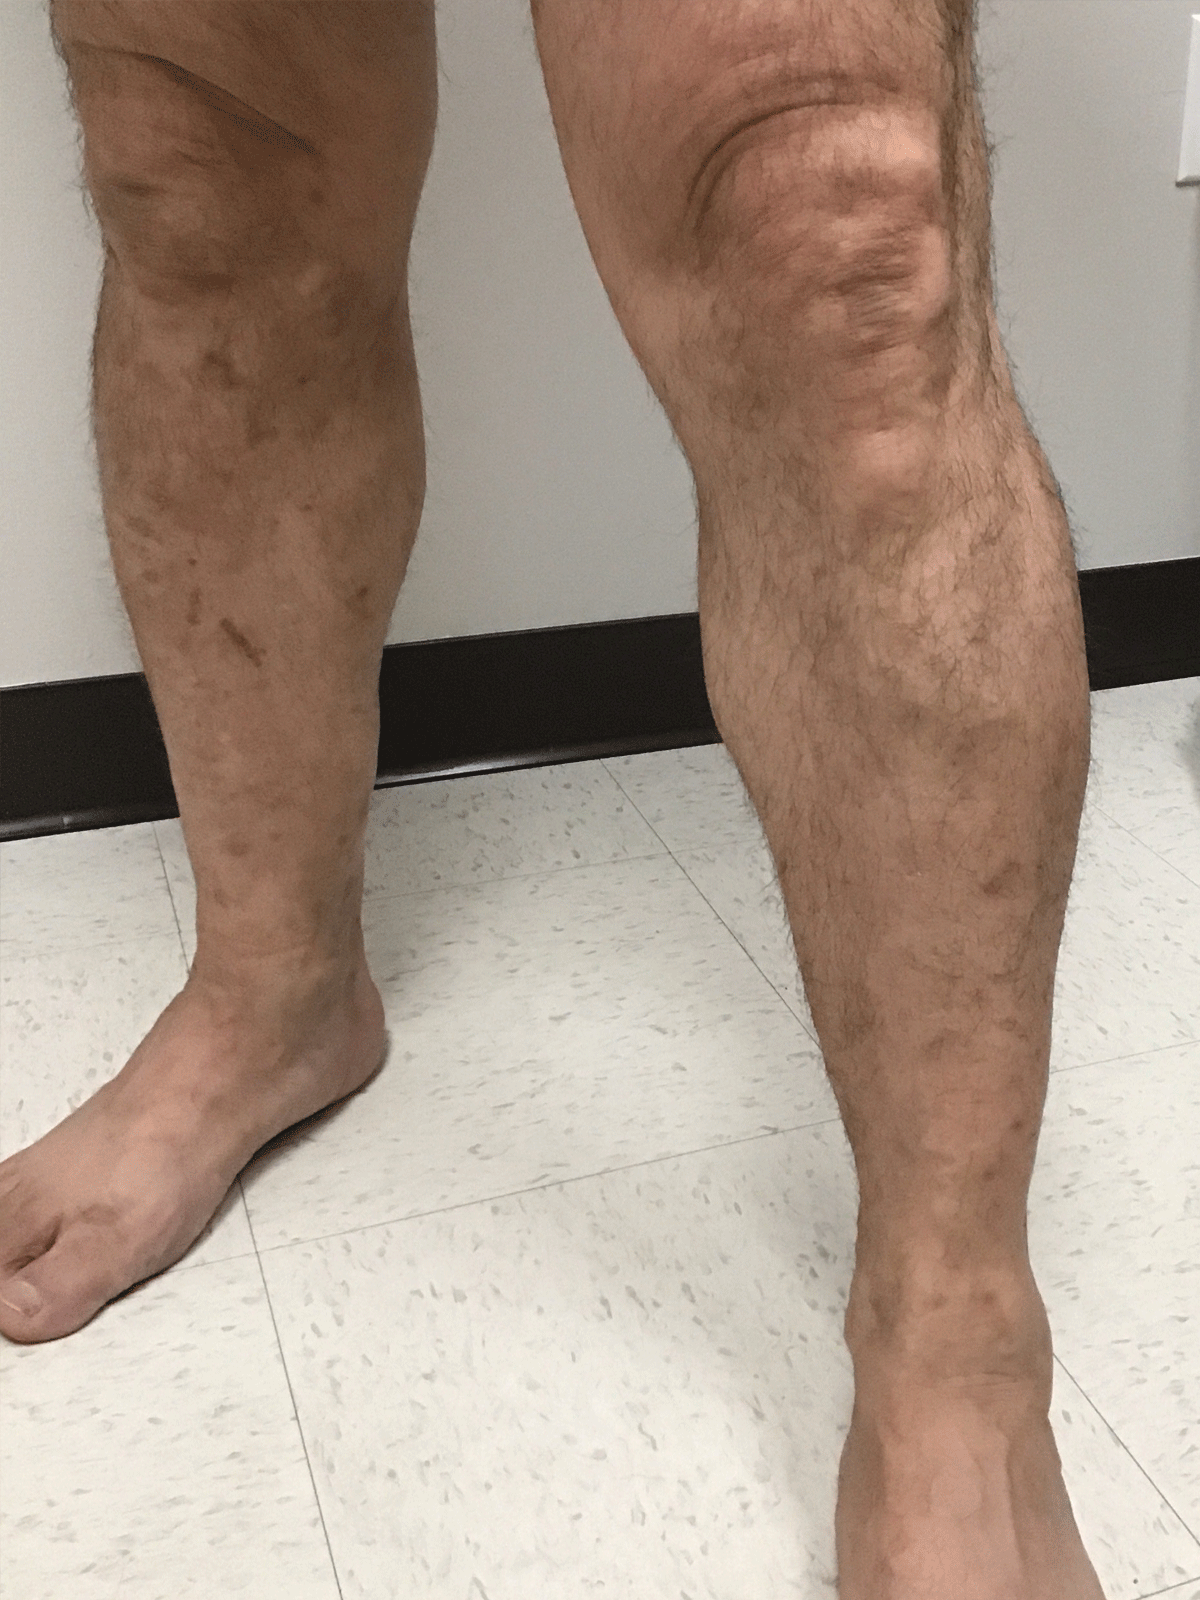 Legs after vein treatment